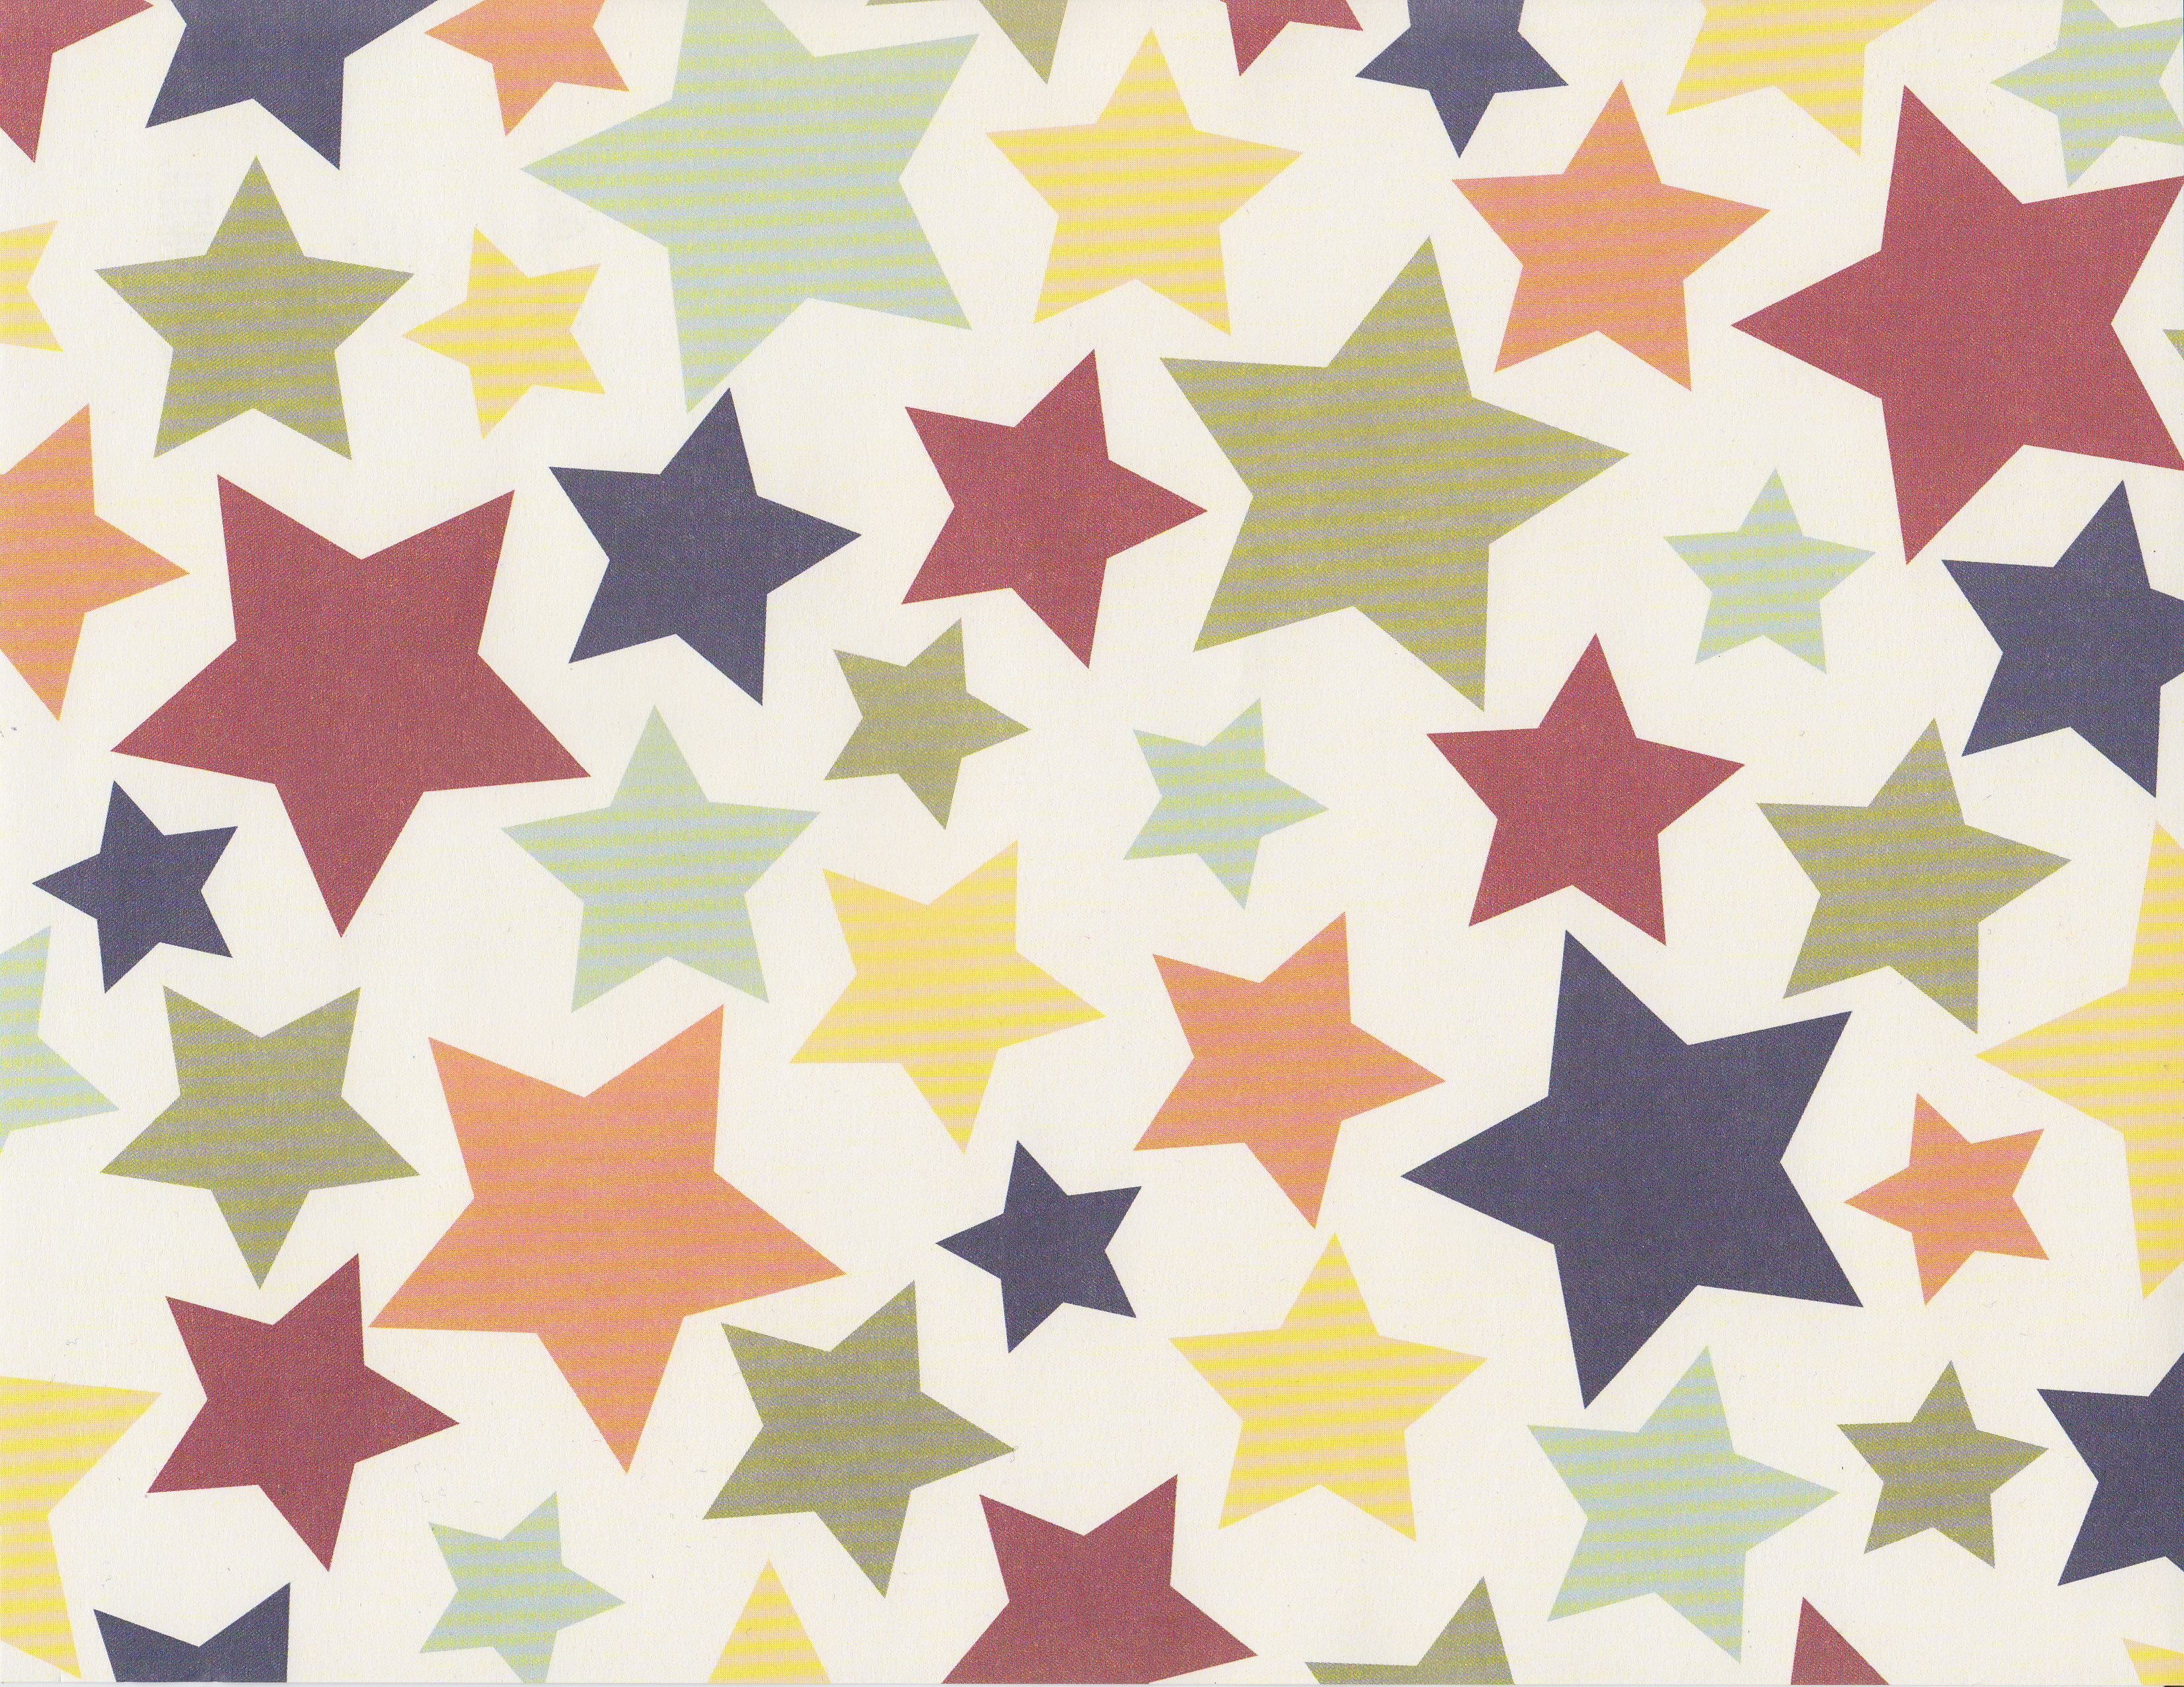 Pattern pictures. Фон звезды. Цветные звездочки. Обои звезды. Орнамент звезды.